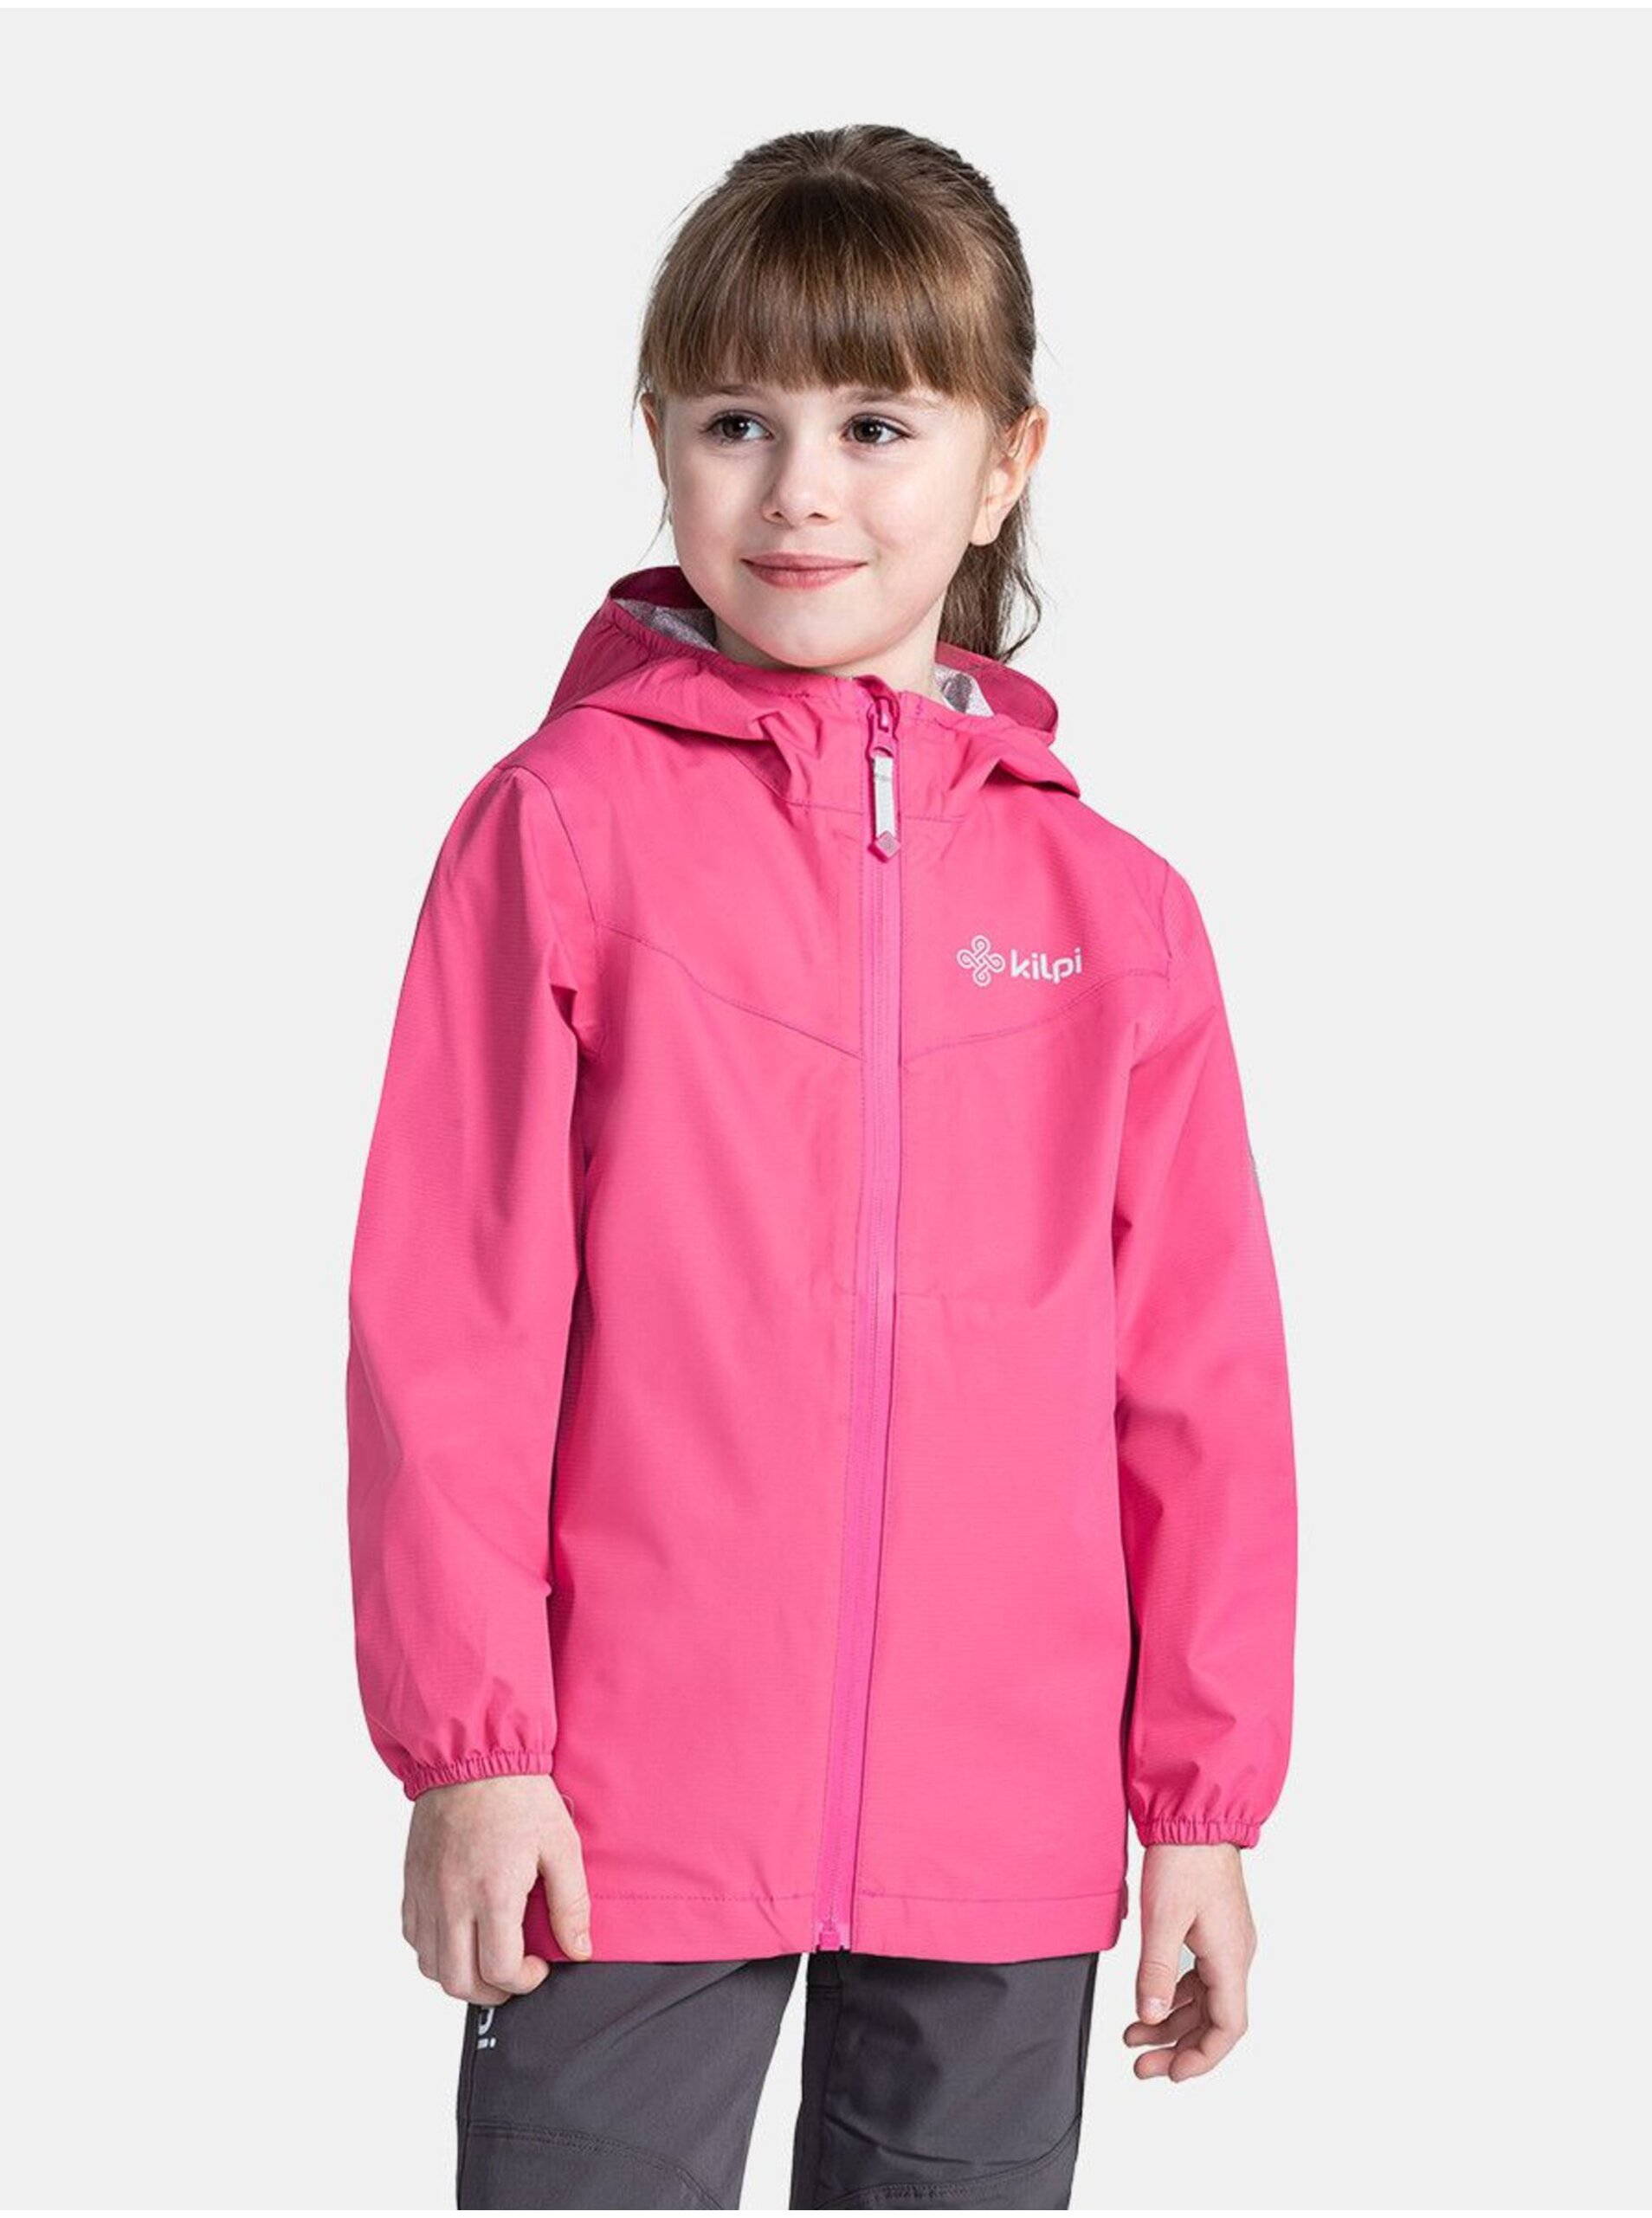 E-shop Růžová holčičí nepromokavá bunda Kilpi Damiri